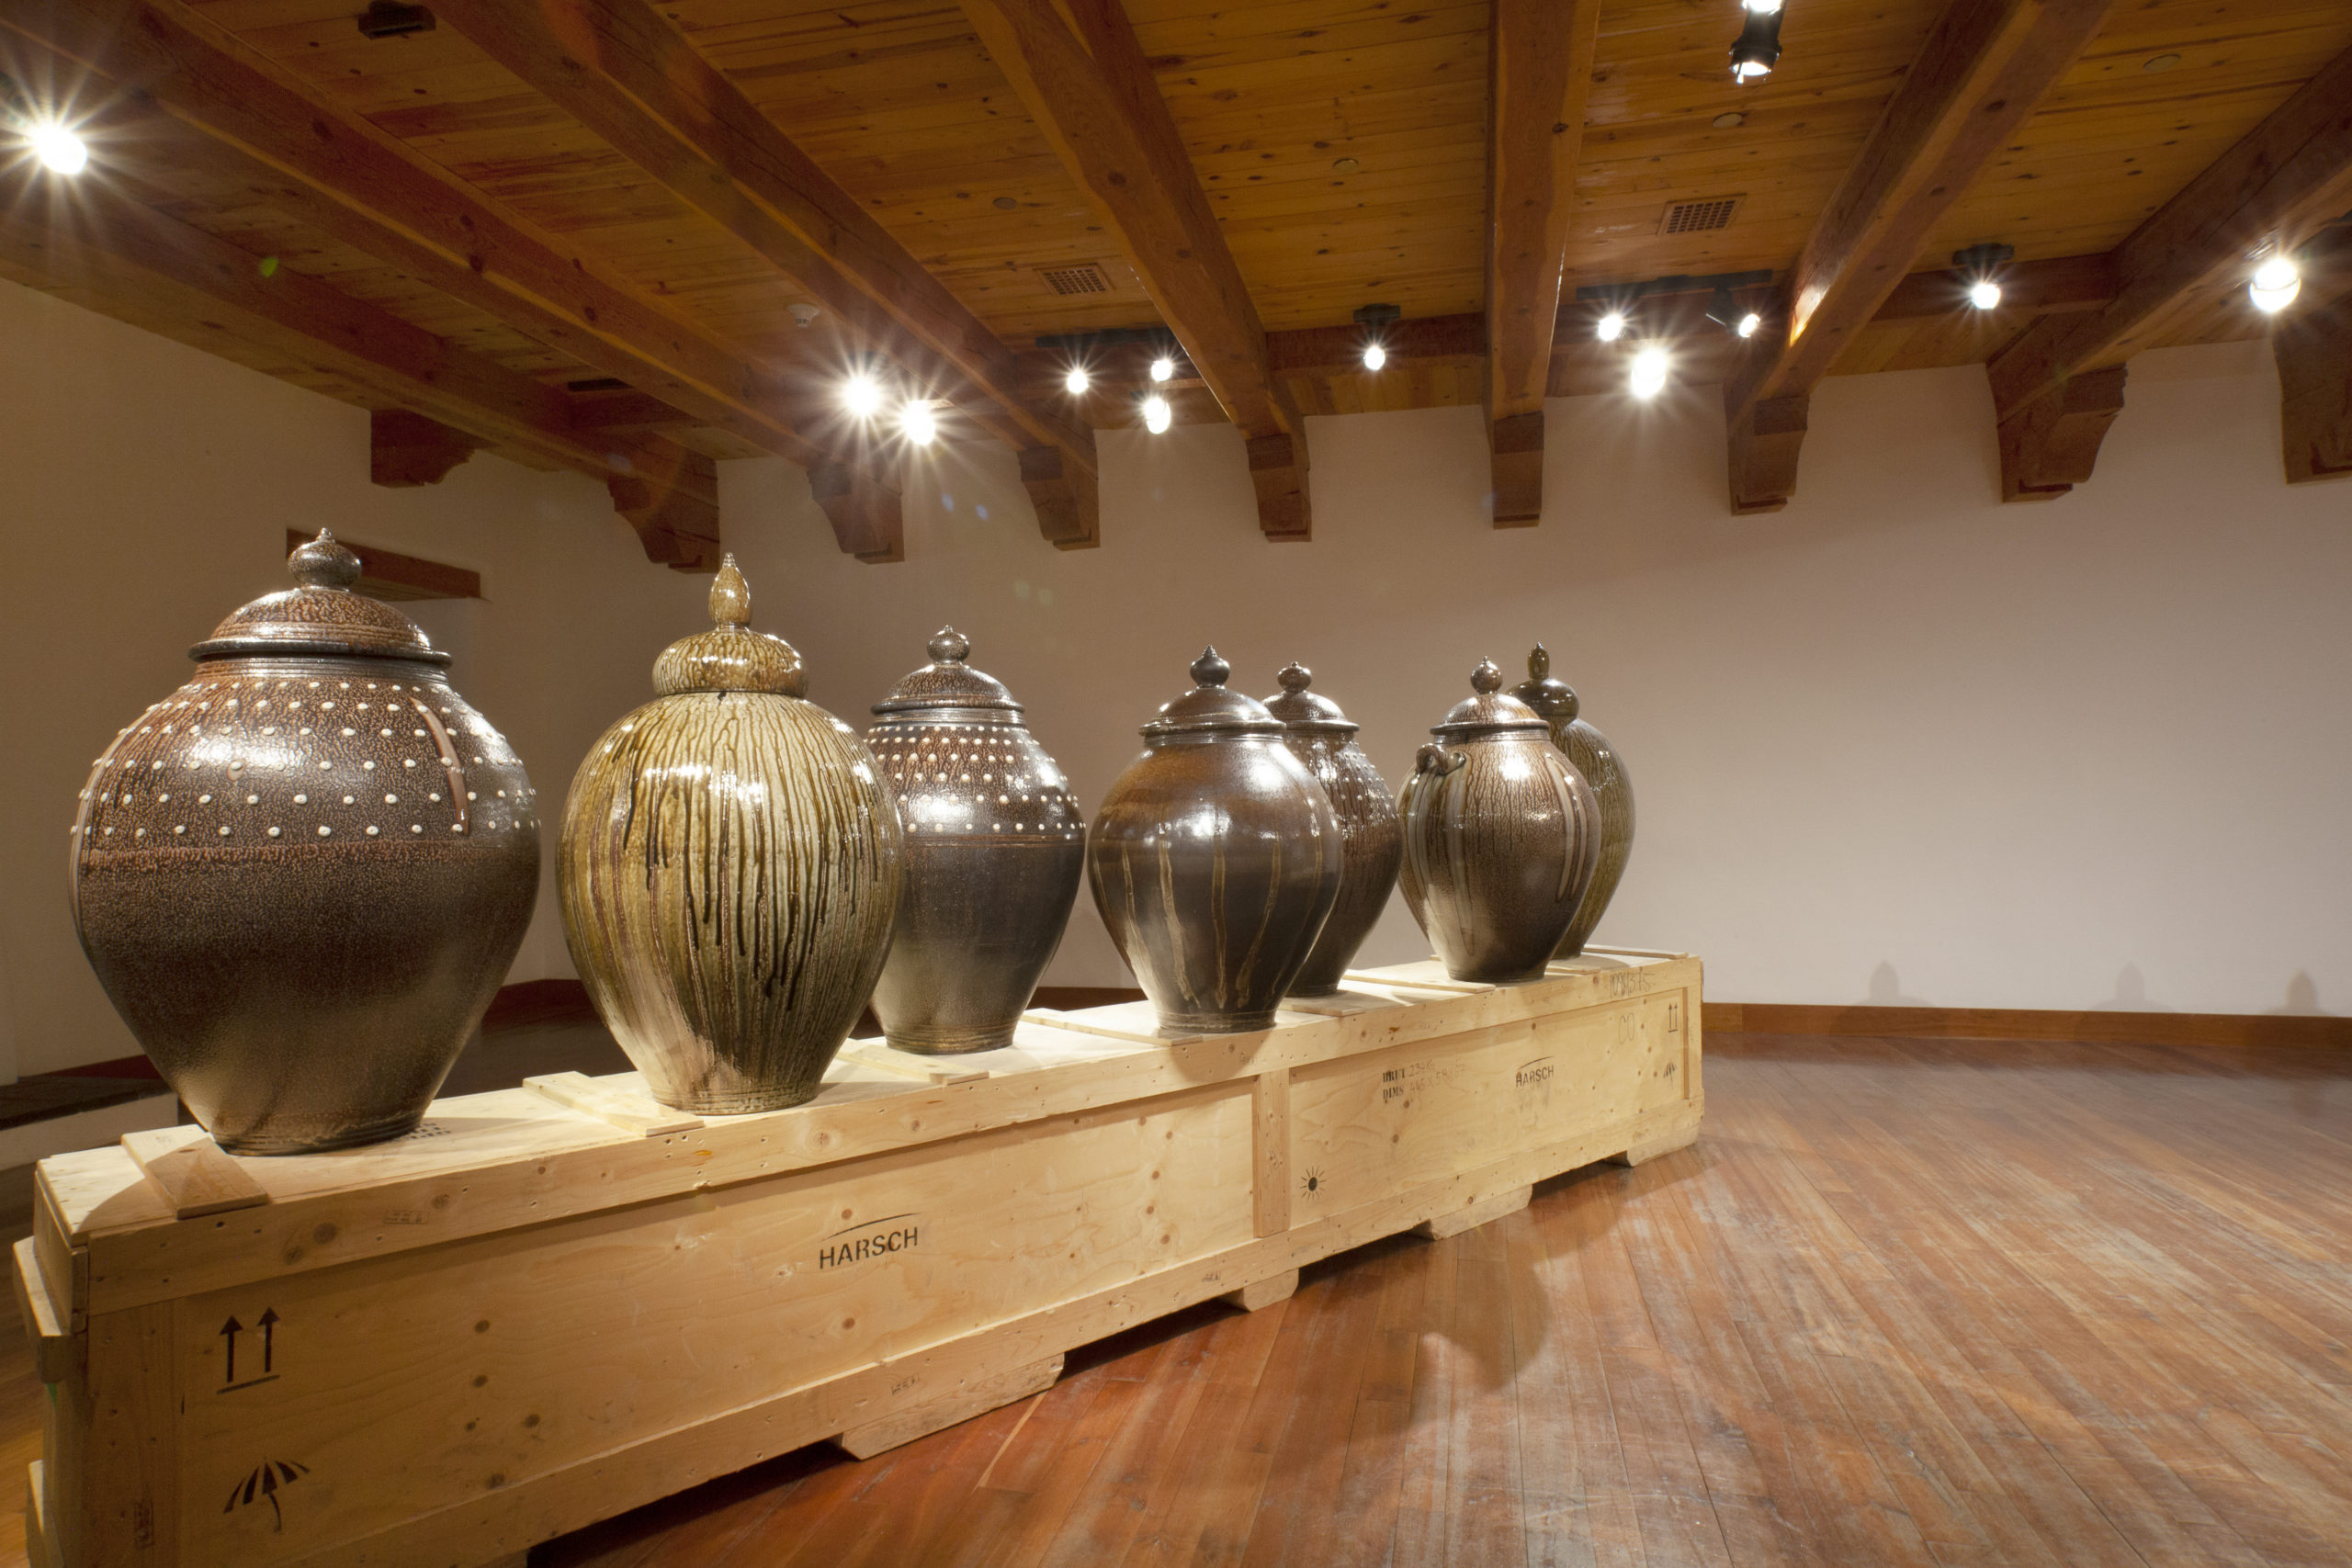 

											Daniel Johnston</b>

											<em>
												New Works</em> 

											<h4>
												Through May 1											</h4>

		                																																													<i>Daniel Johnston Installation,</i>  
																																								2021, 
																																								wood-fired thrown stoneware, 
																																								dimensions vary 
																								
		                				